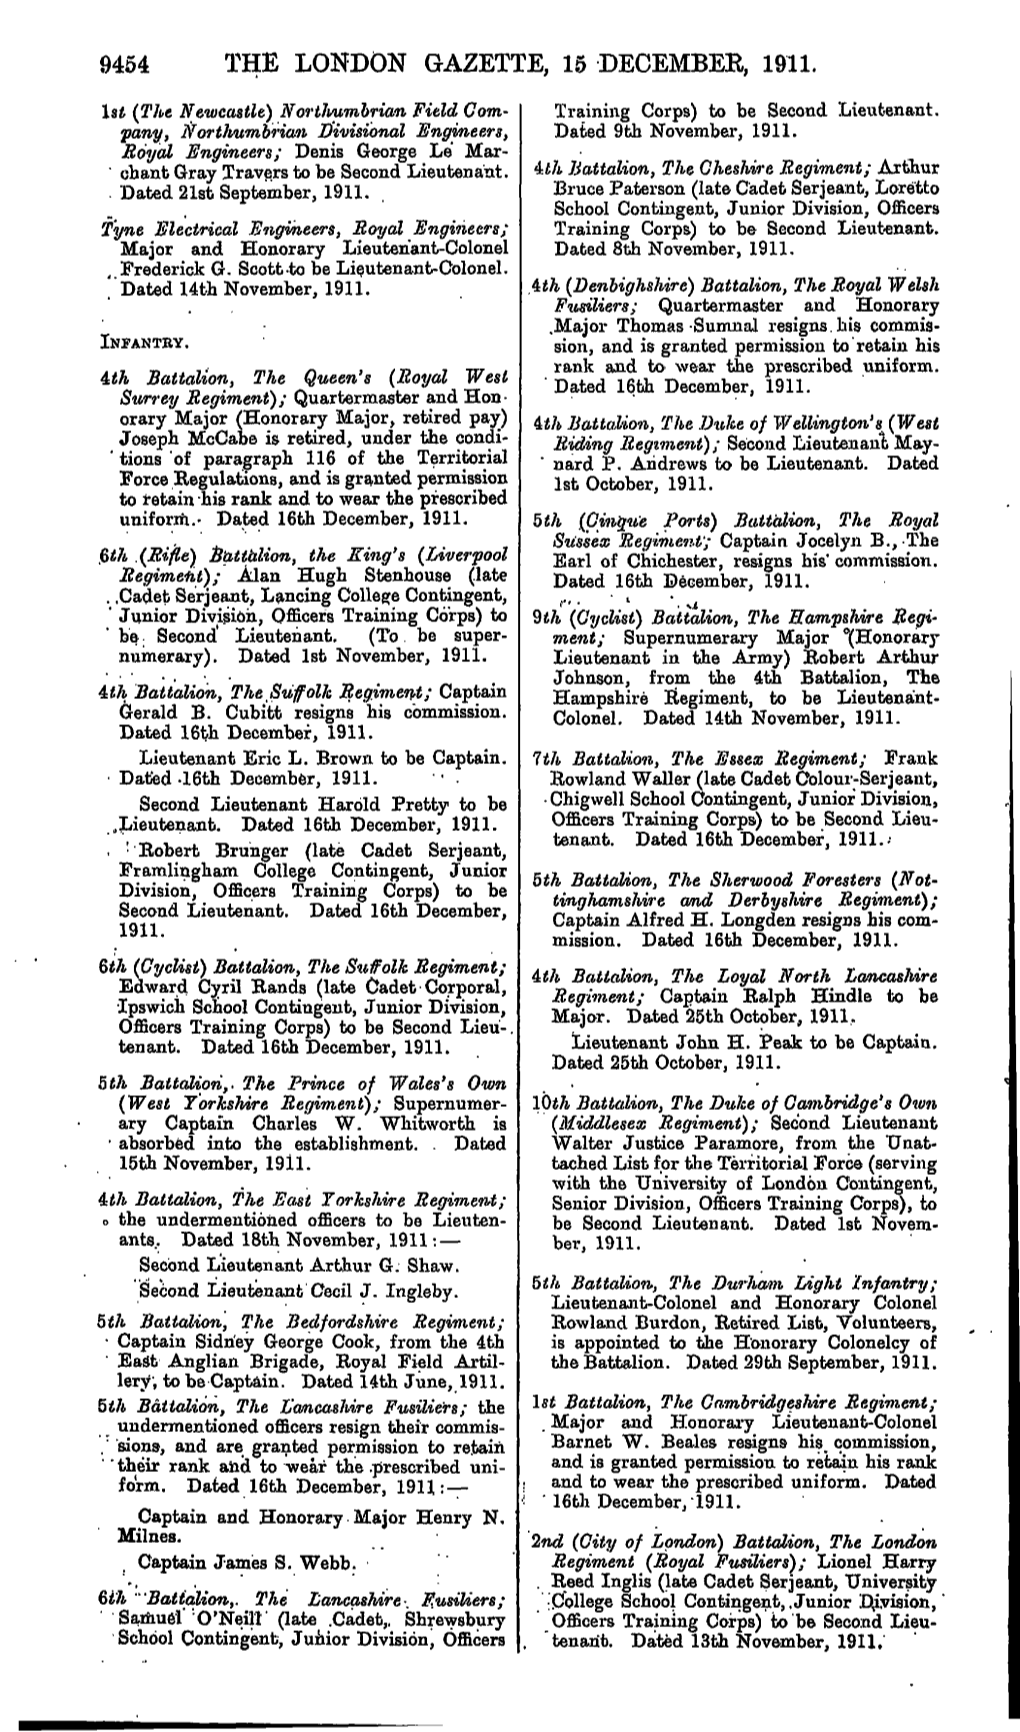 9454 the London Gazette, 15 December, 1911